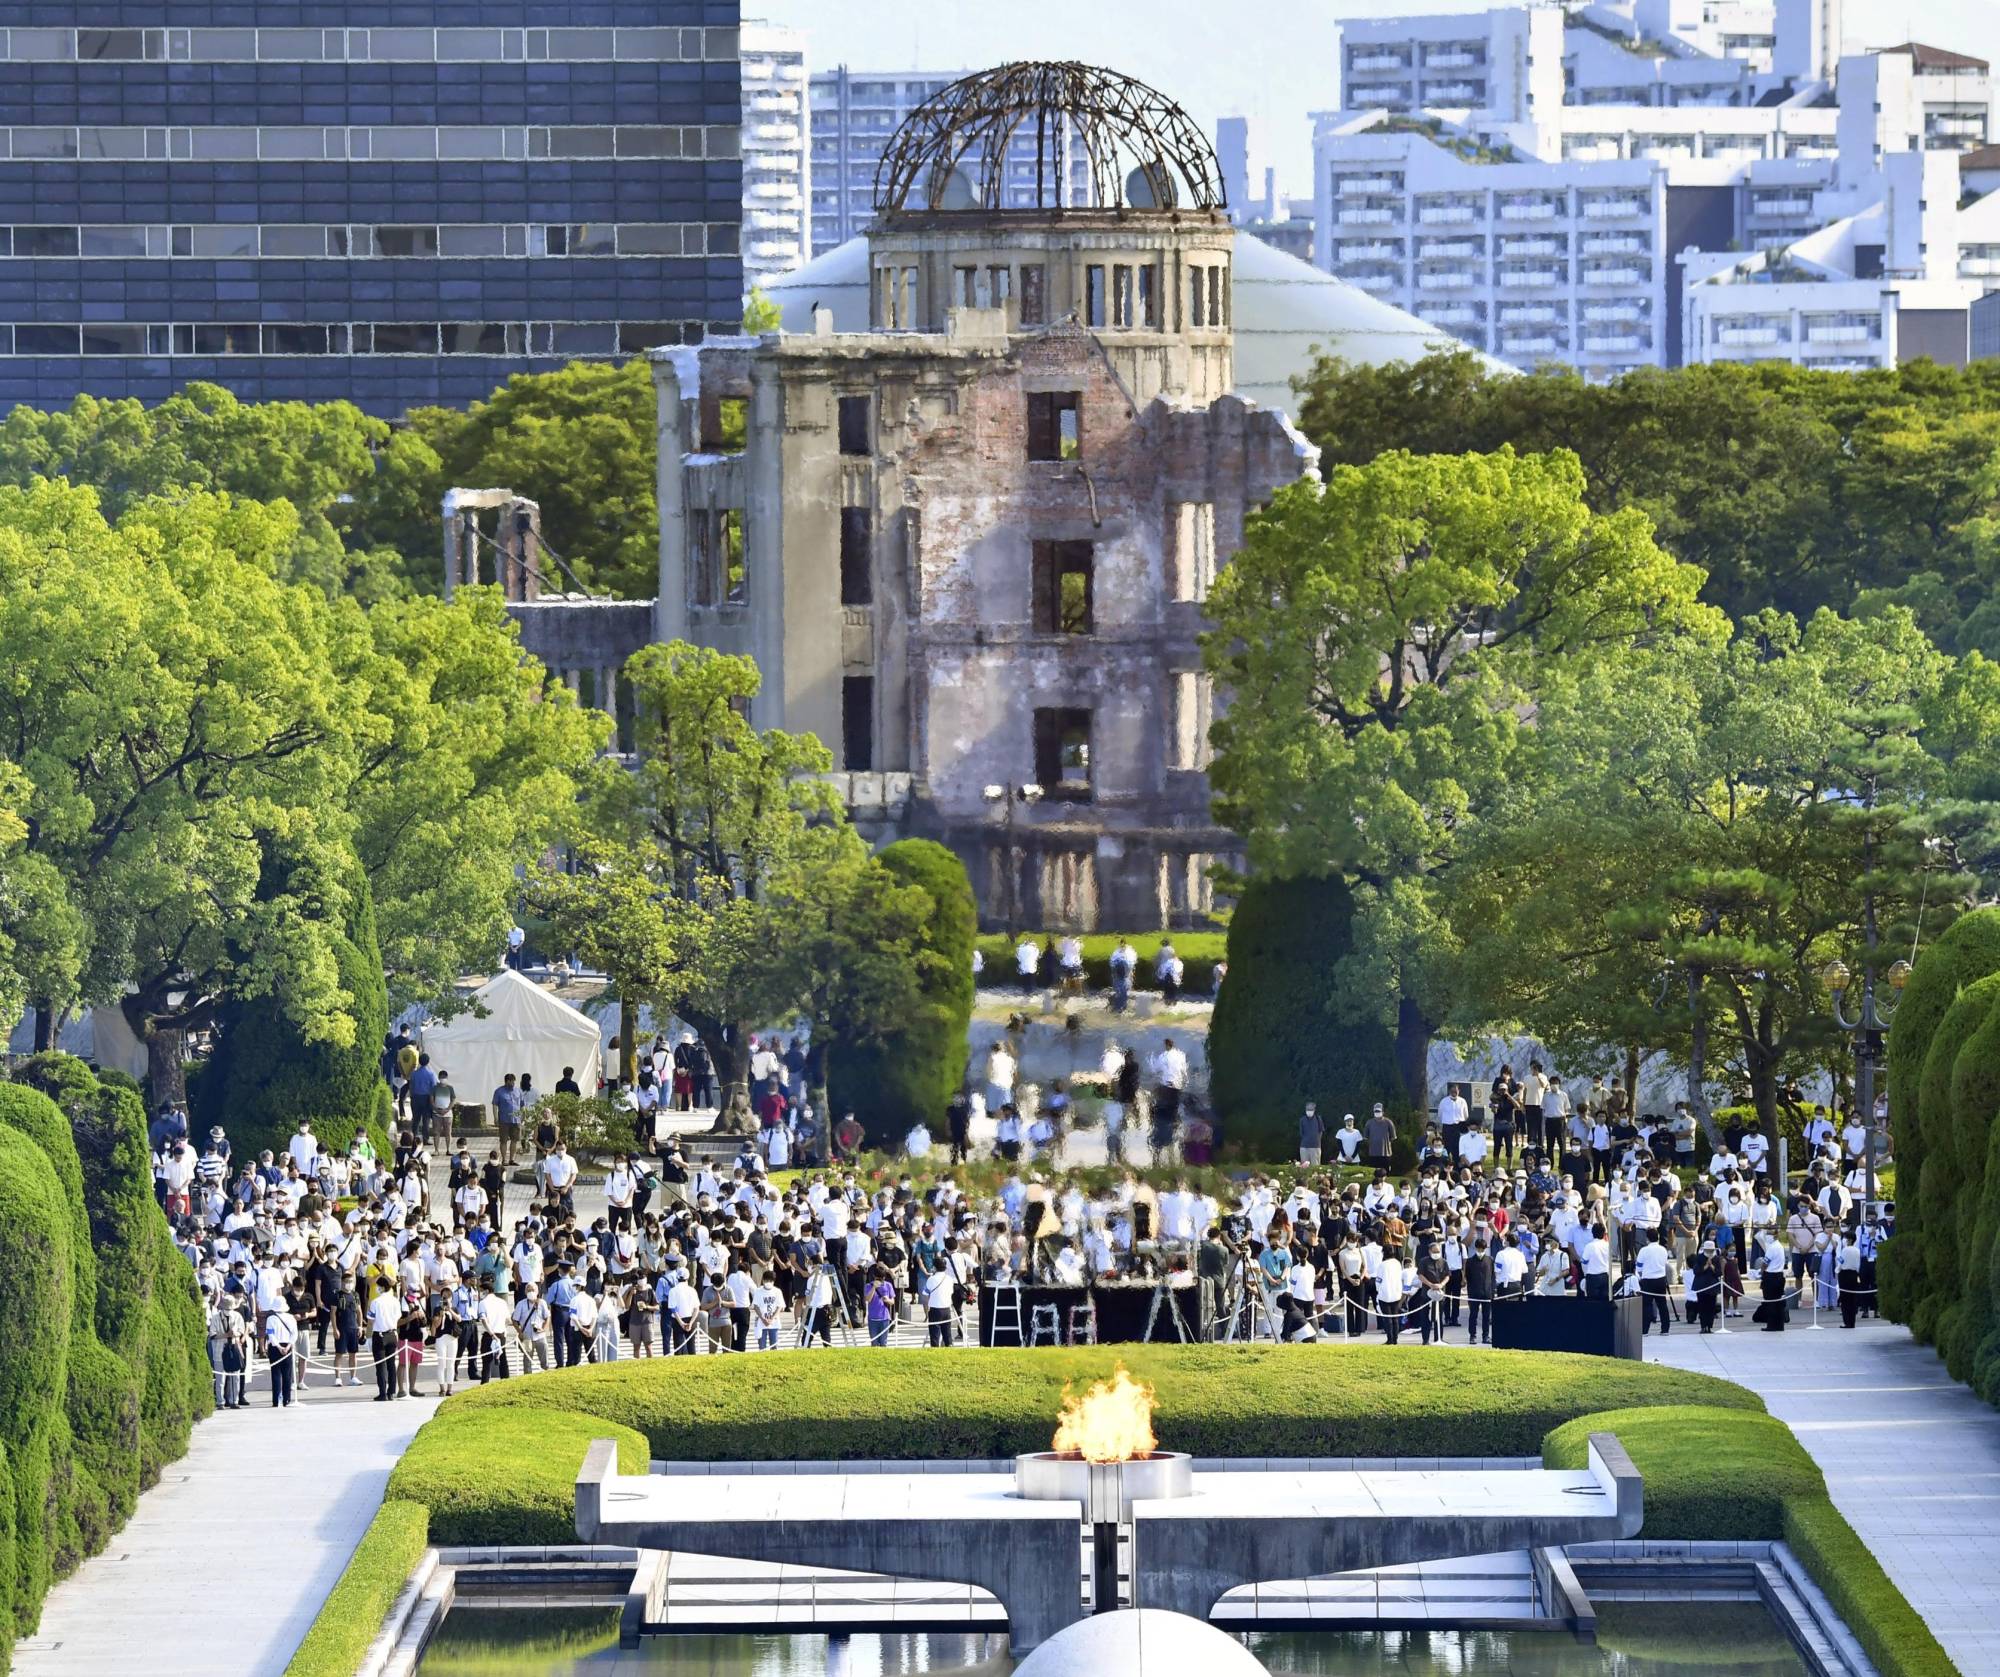 Hiroshima remembered